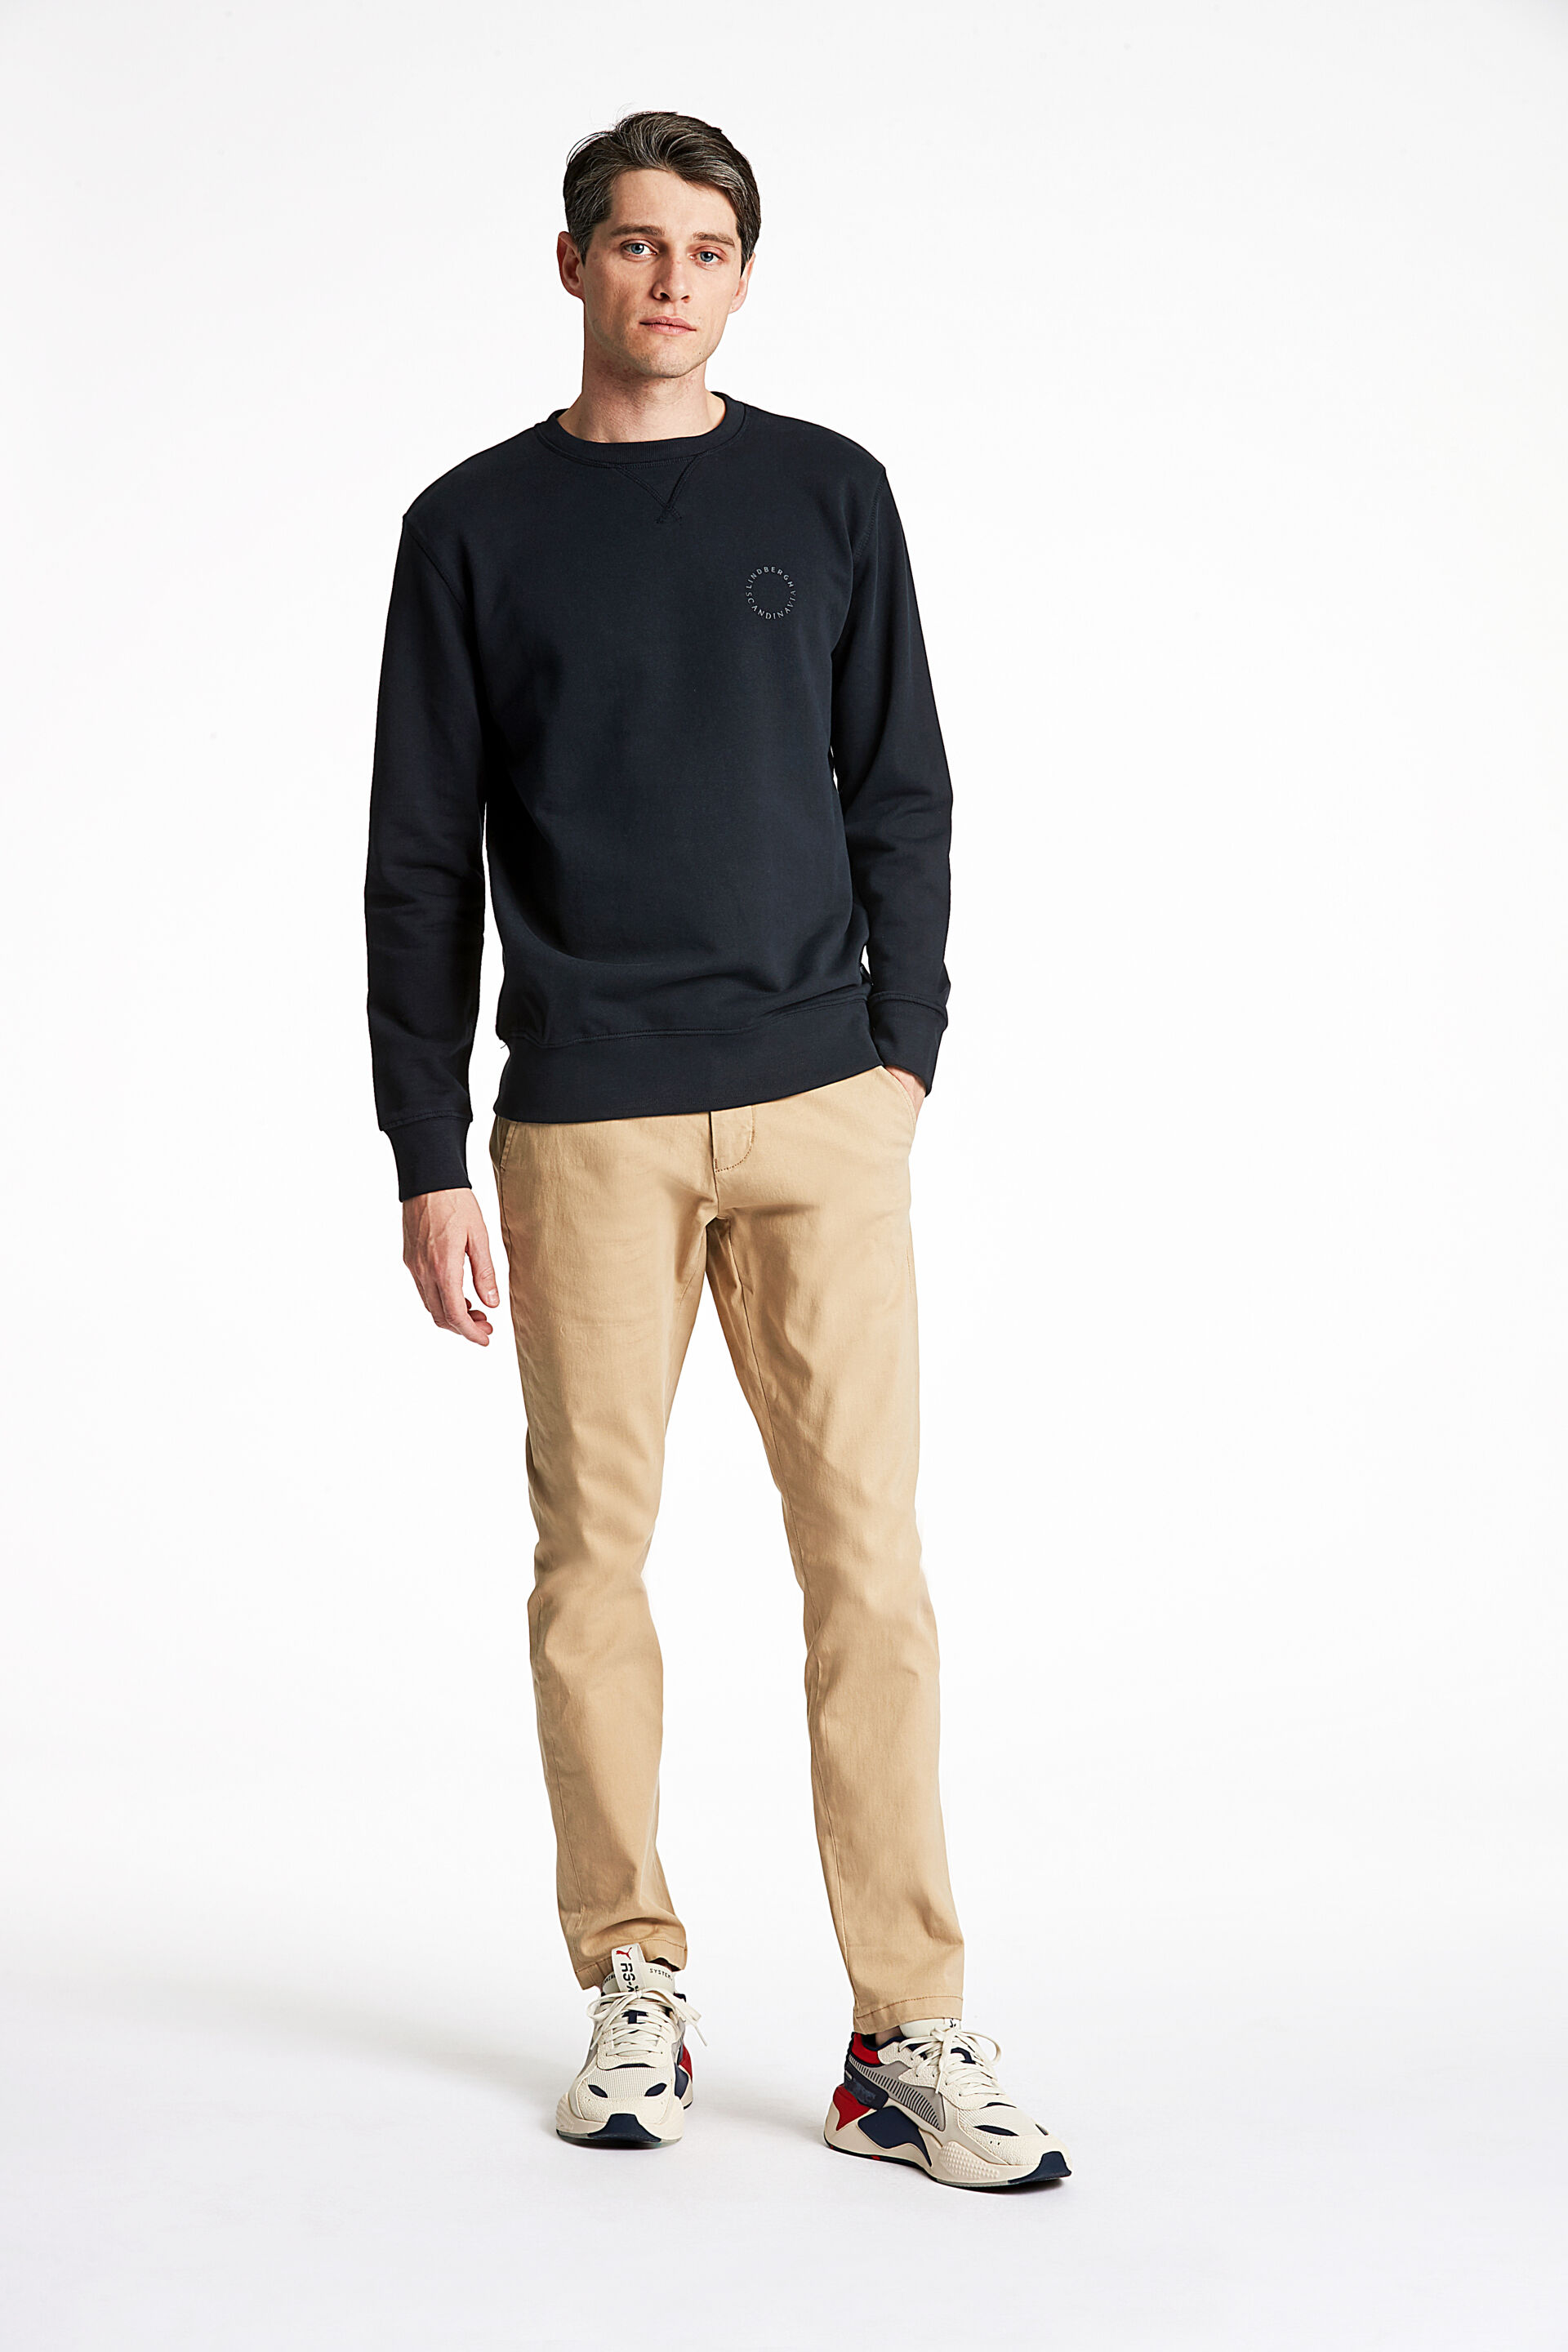 Sweater 30-705095